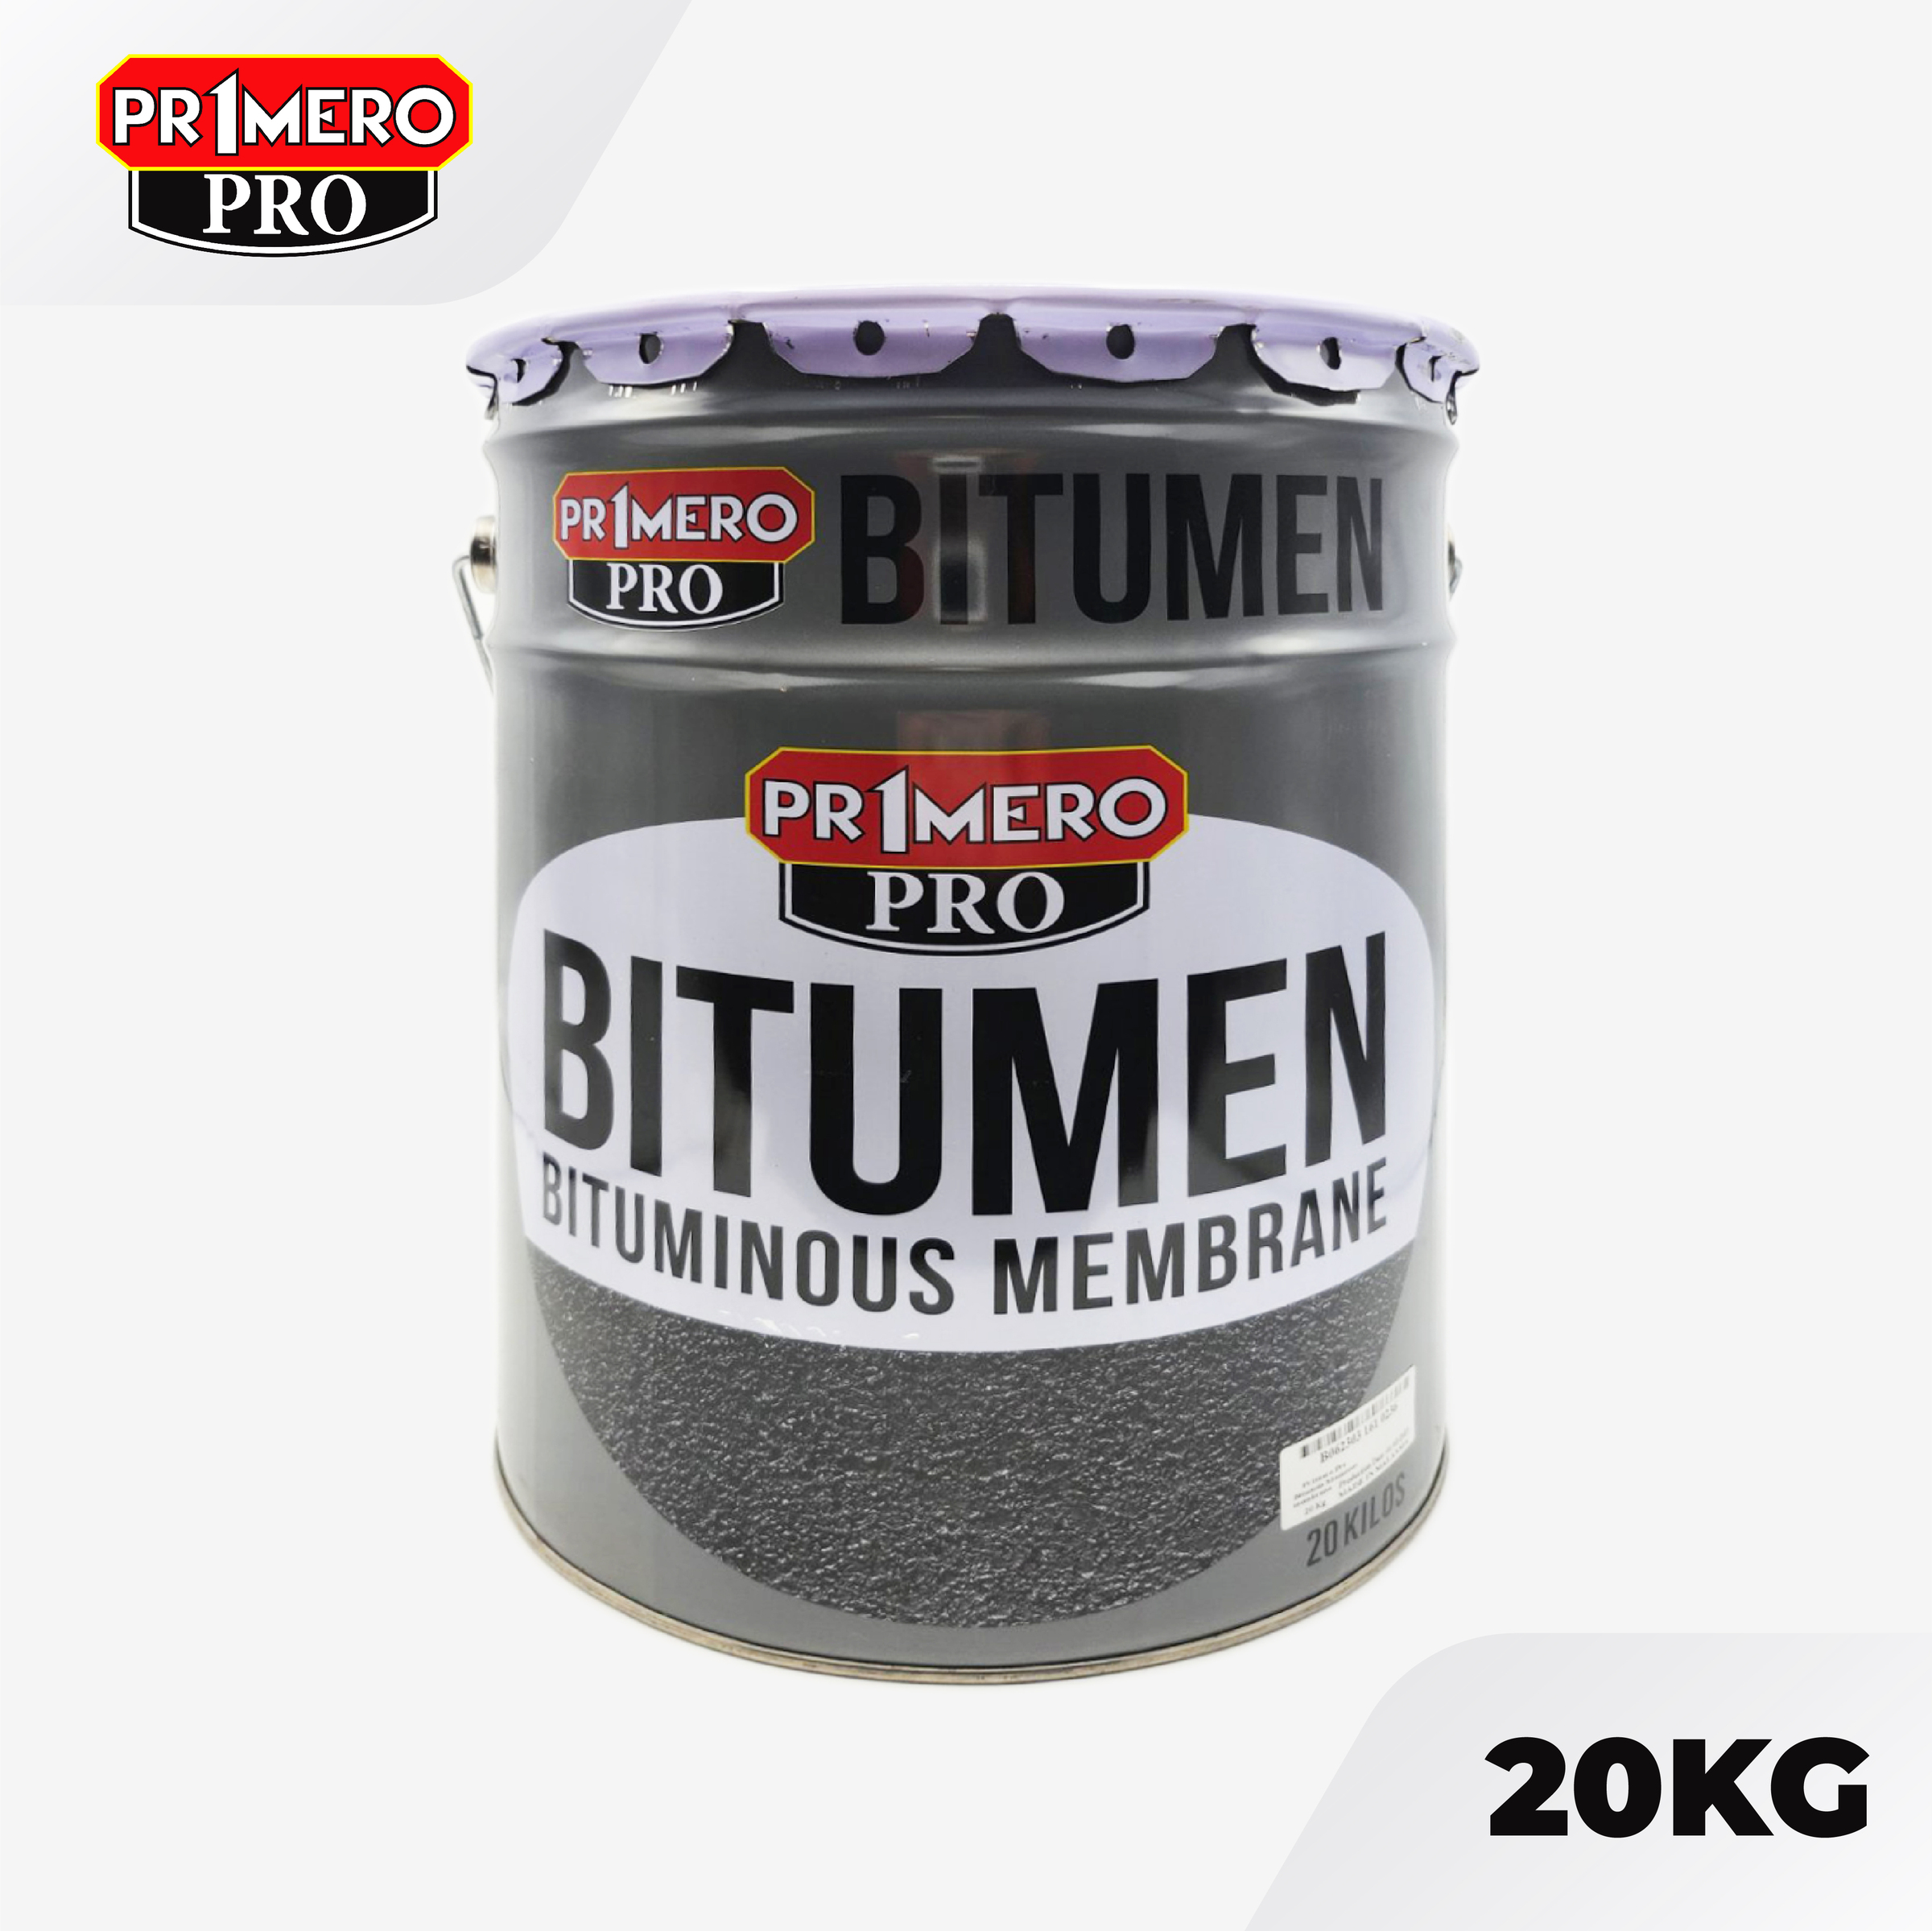 Primero Pro Bitumen Membrane - 20kgs